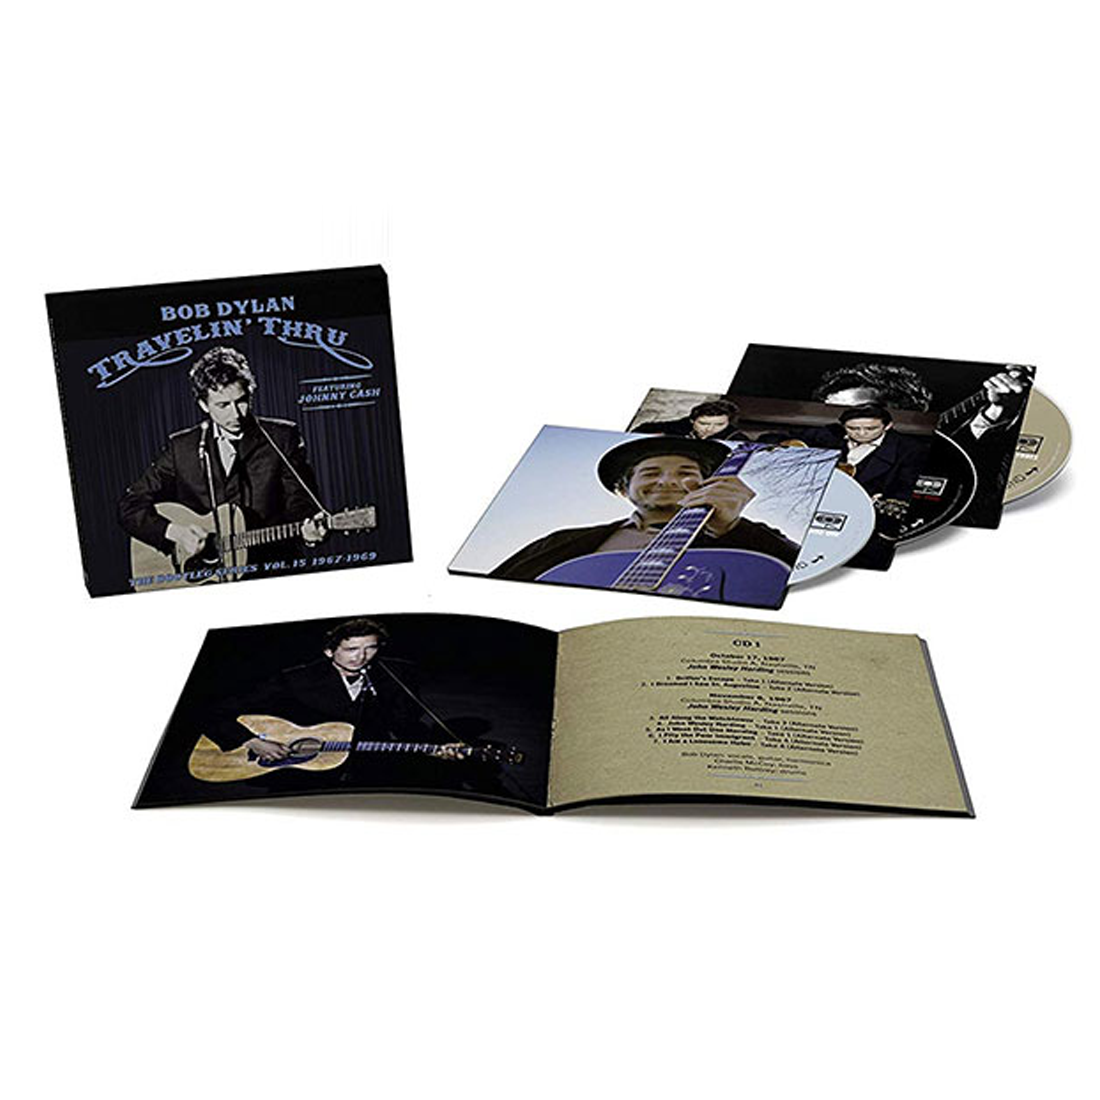 Bob Dylan Featuring Johnny Cash - Travelin’ Thru, 1967 – 1969 - The Bootleg Series Vol. 15: 3CD